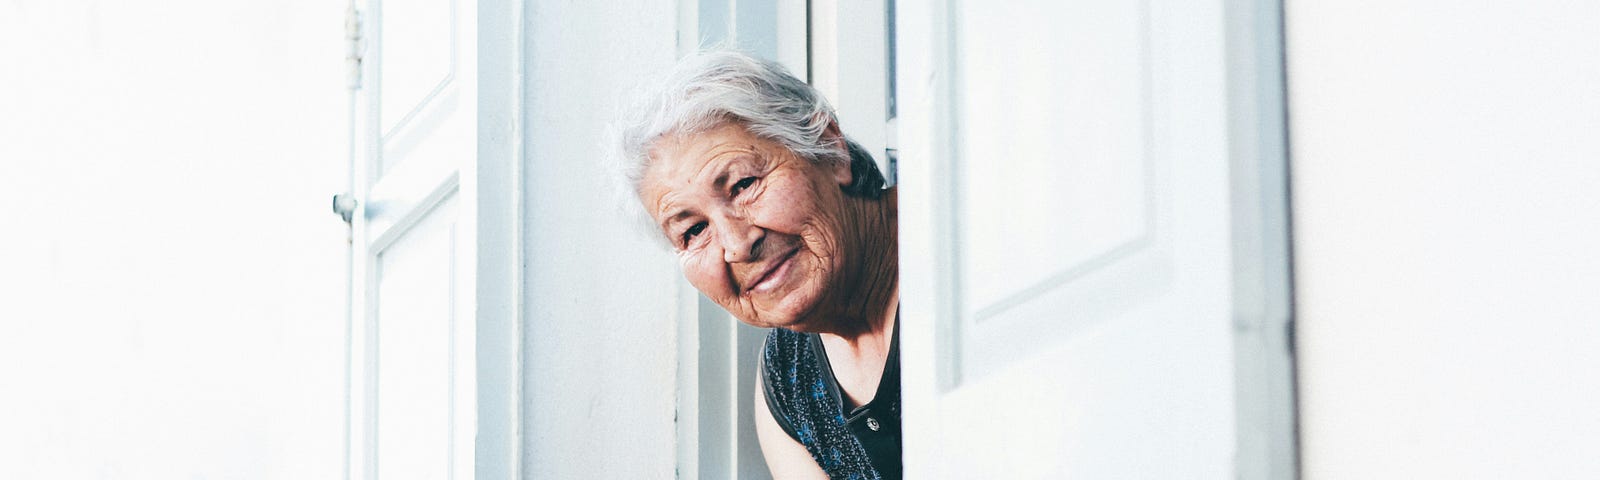 An old lady peeking through a window